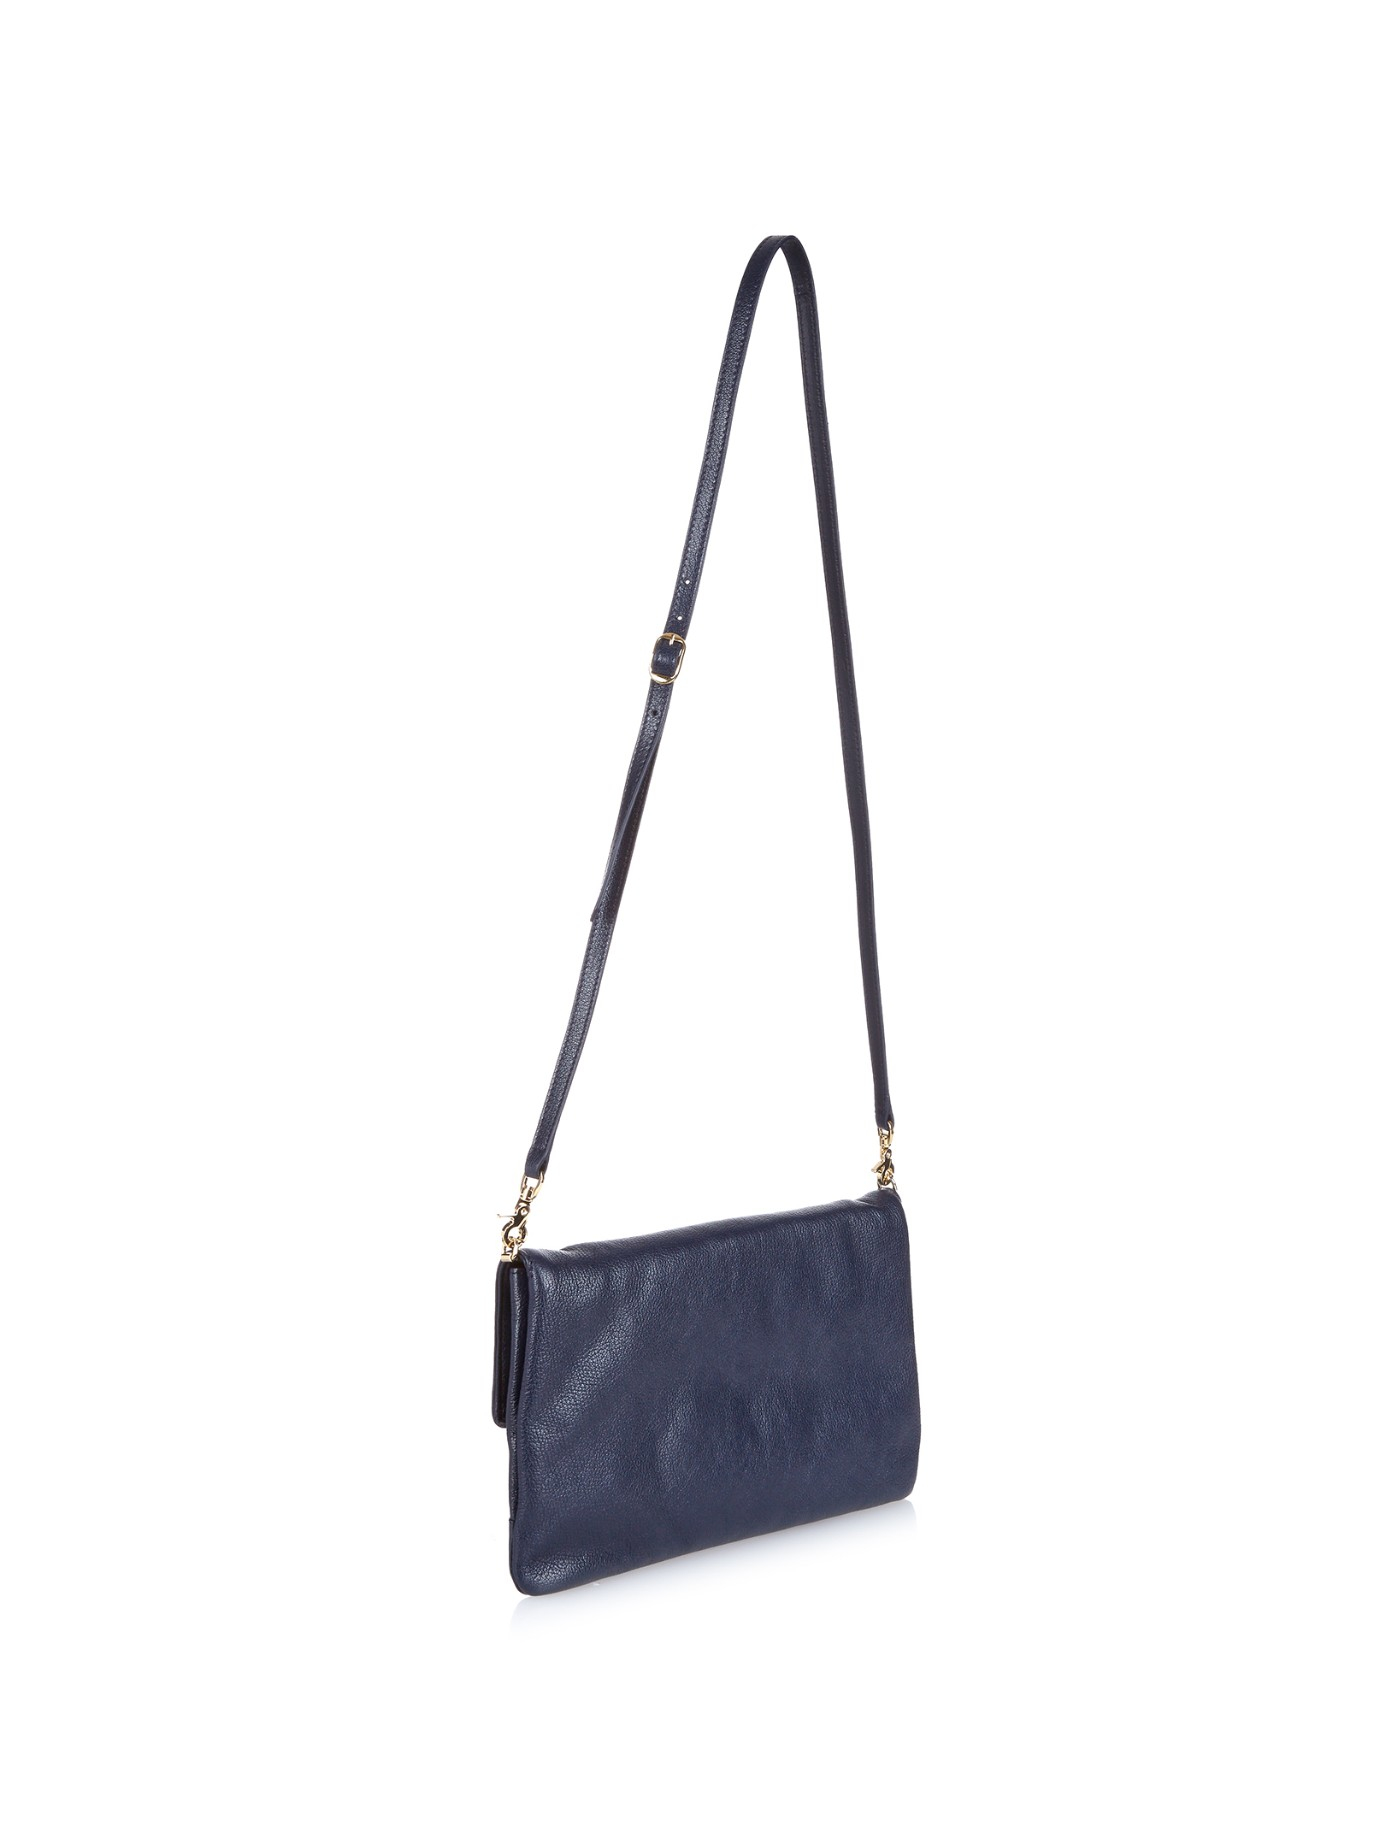 Balenciaga Classic Metallic-edge Leather Envelope Clutch in Blue | Lyst